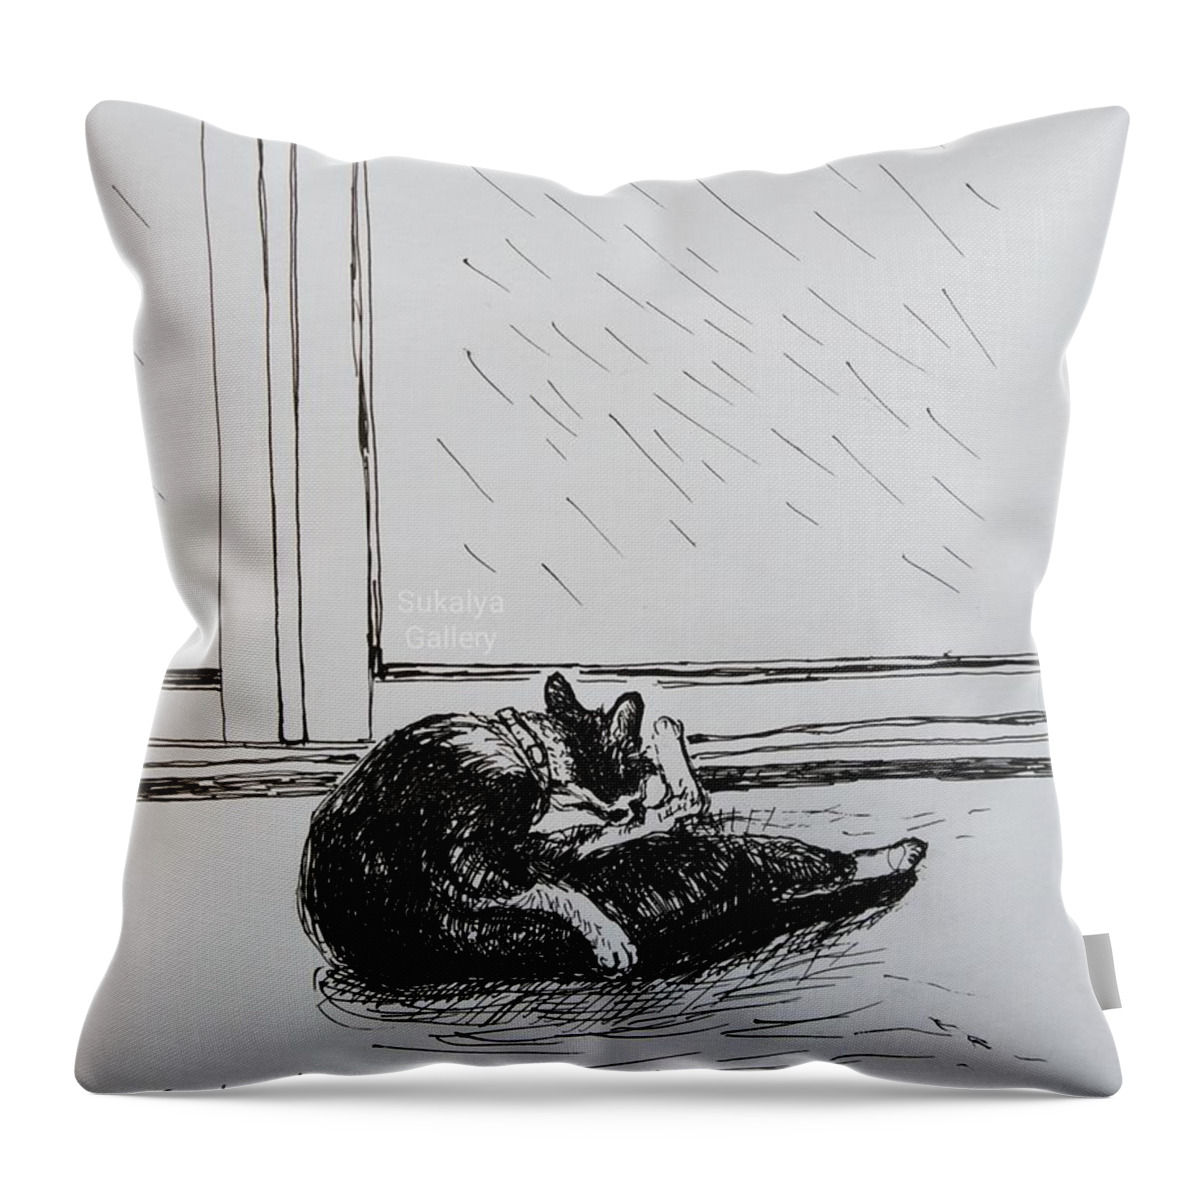 Cat Throw Pillow featuring the drawing On Bath by Sukalya Chearanantana